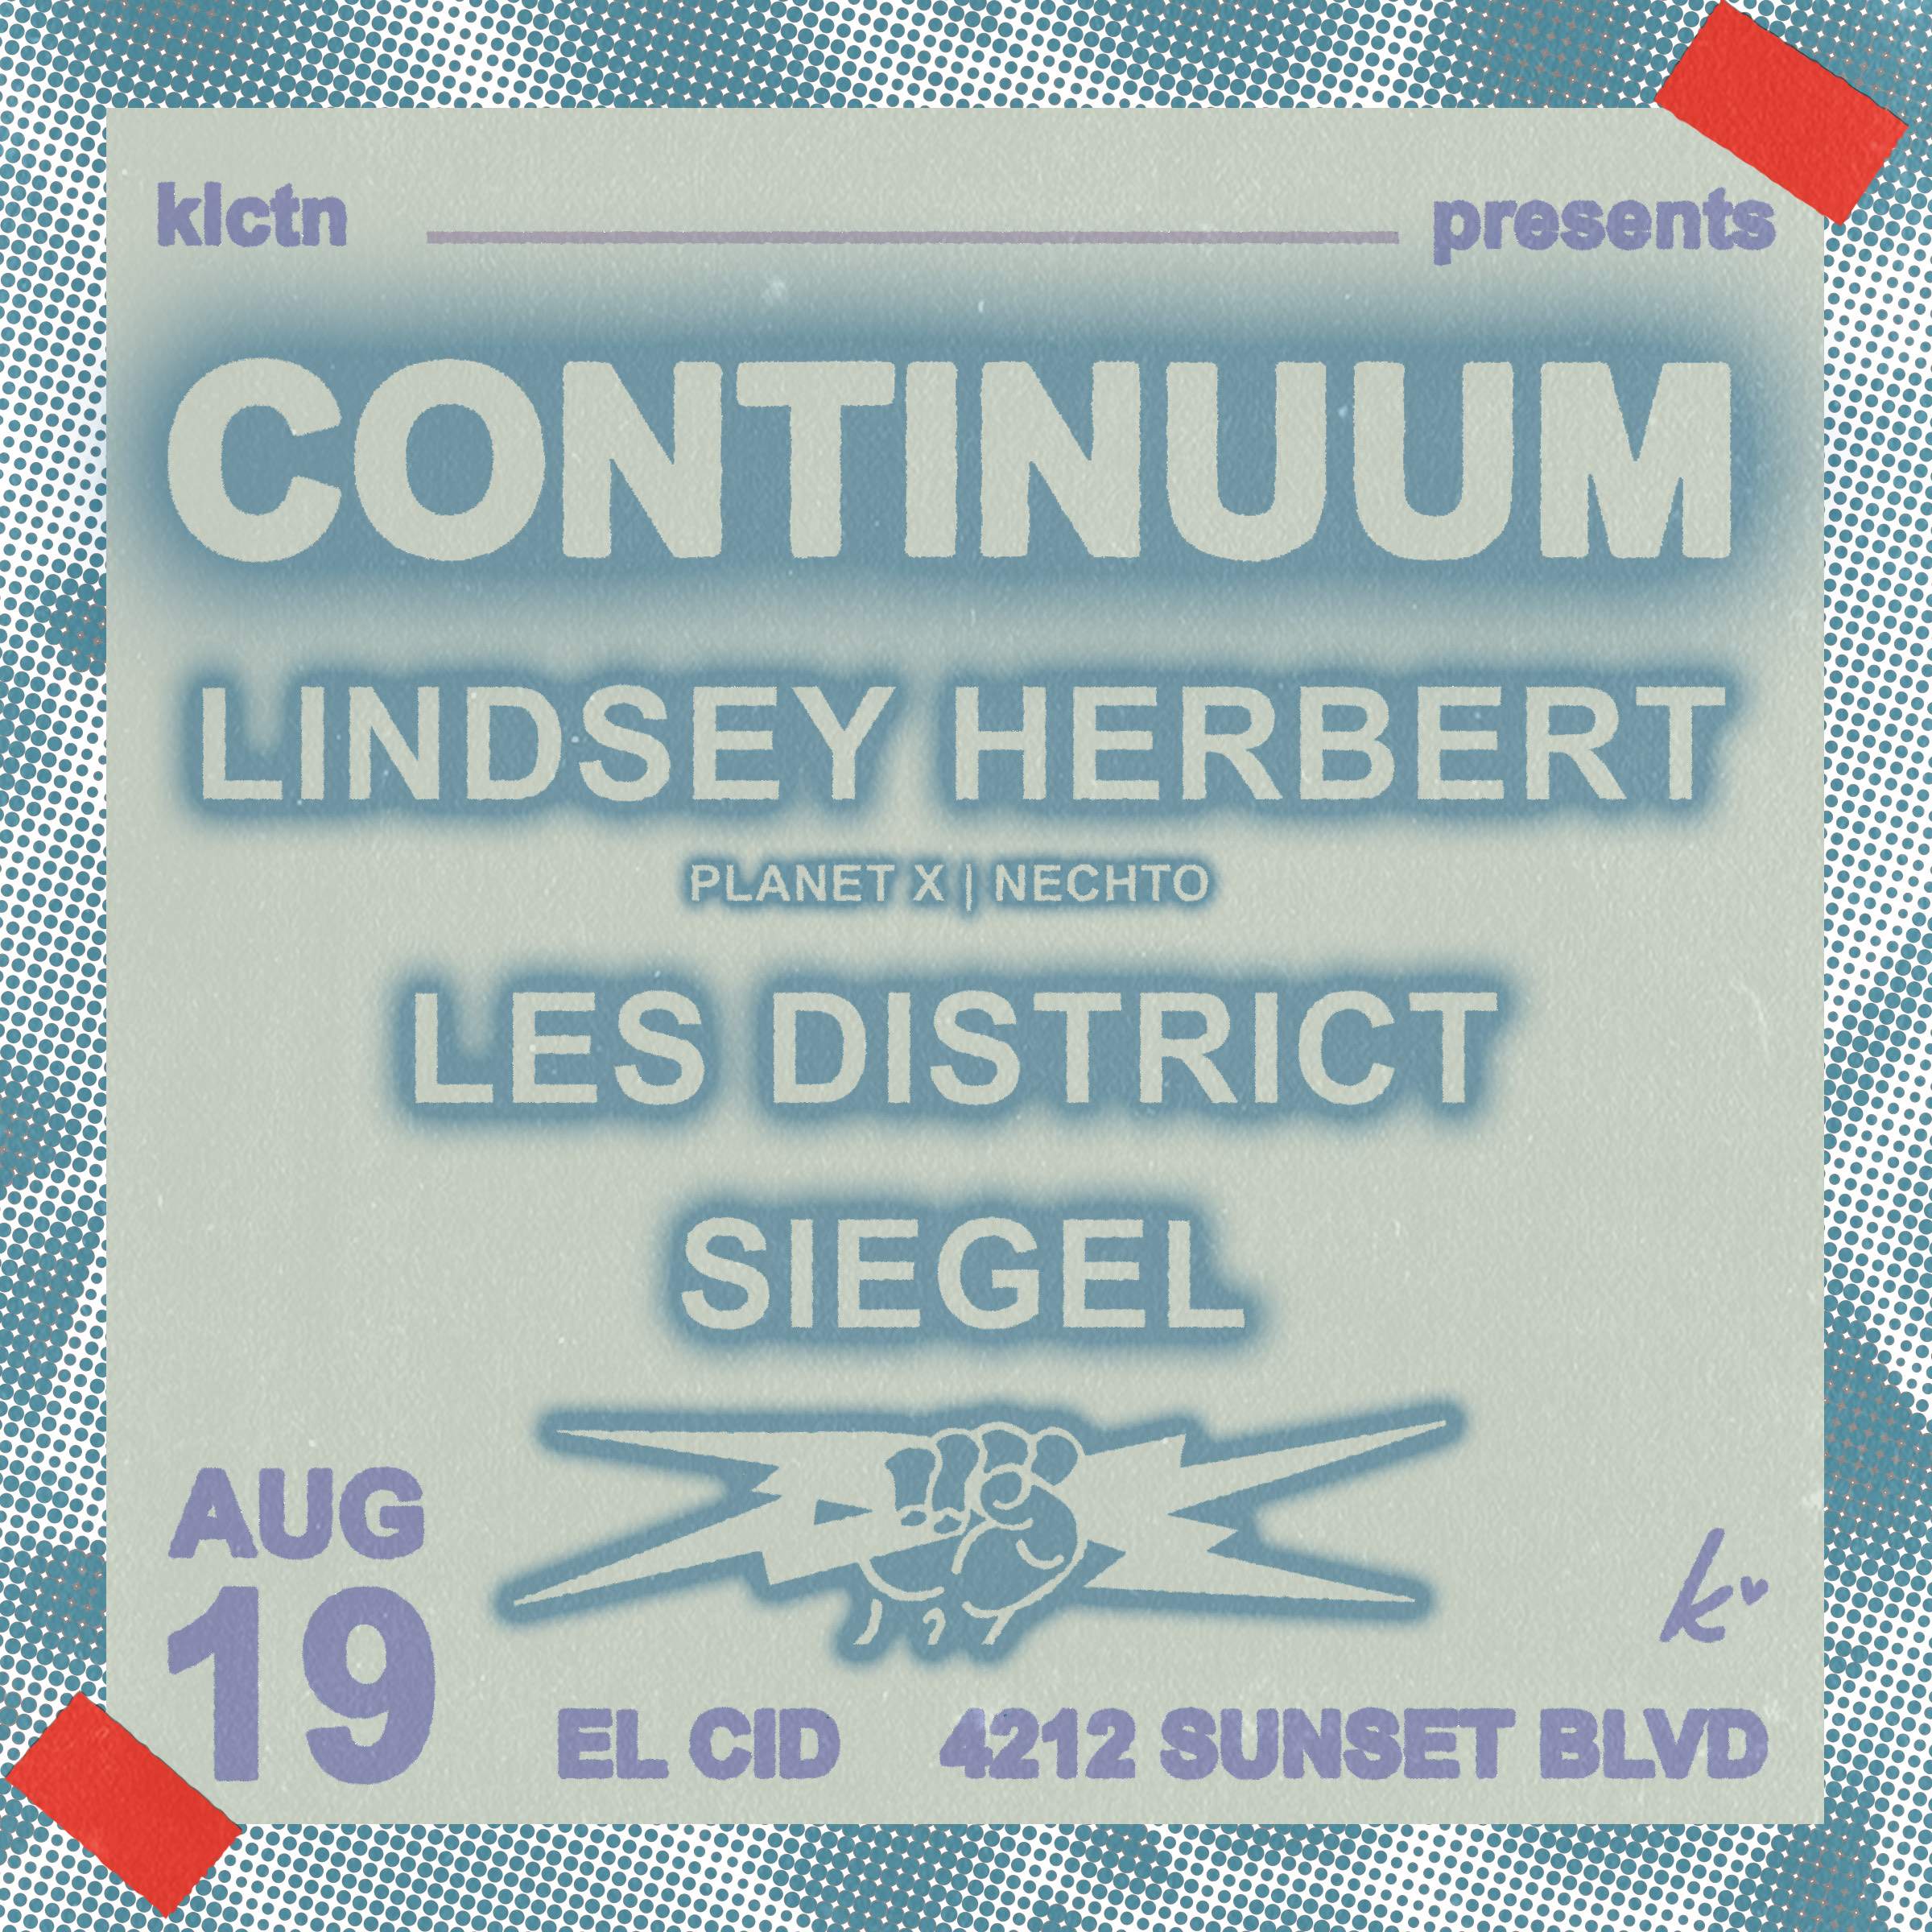 Continuum (Lindsey Herbert, Les District, Siegel) - Flyer front